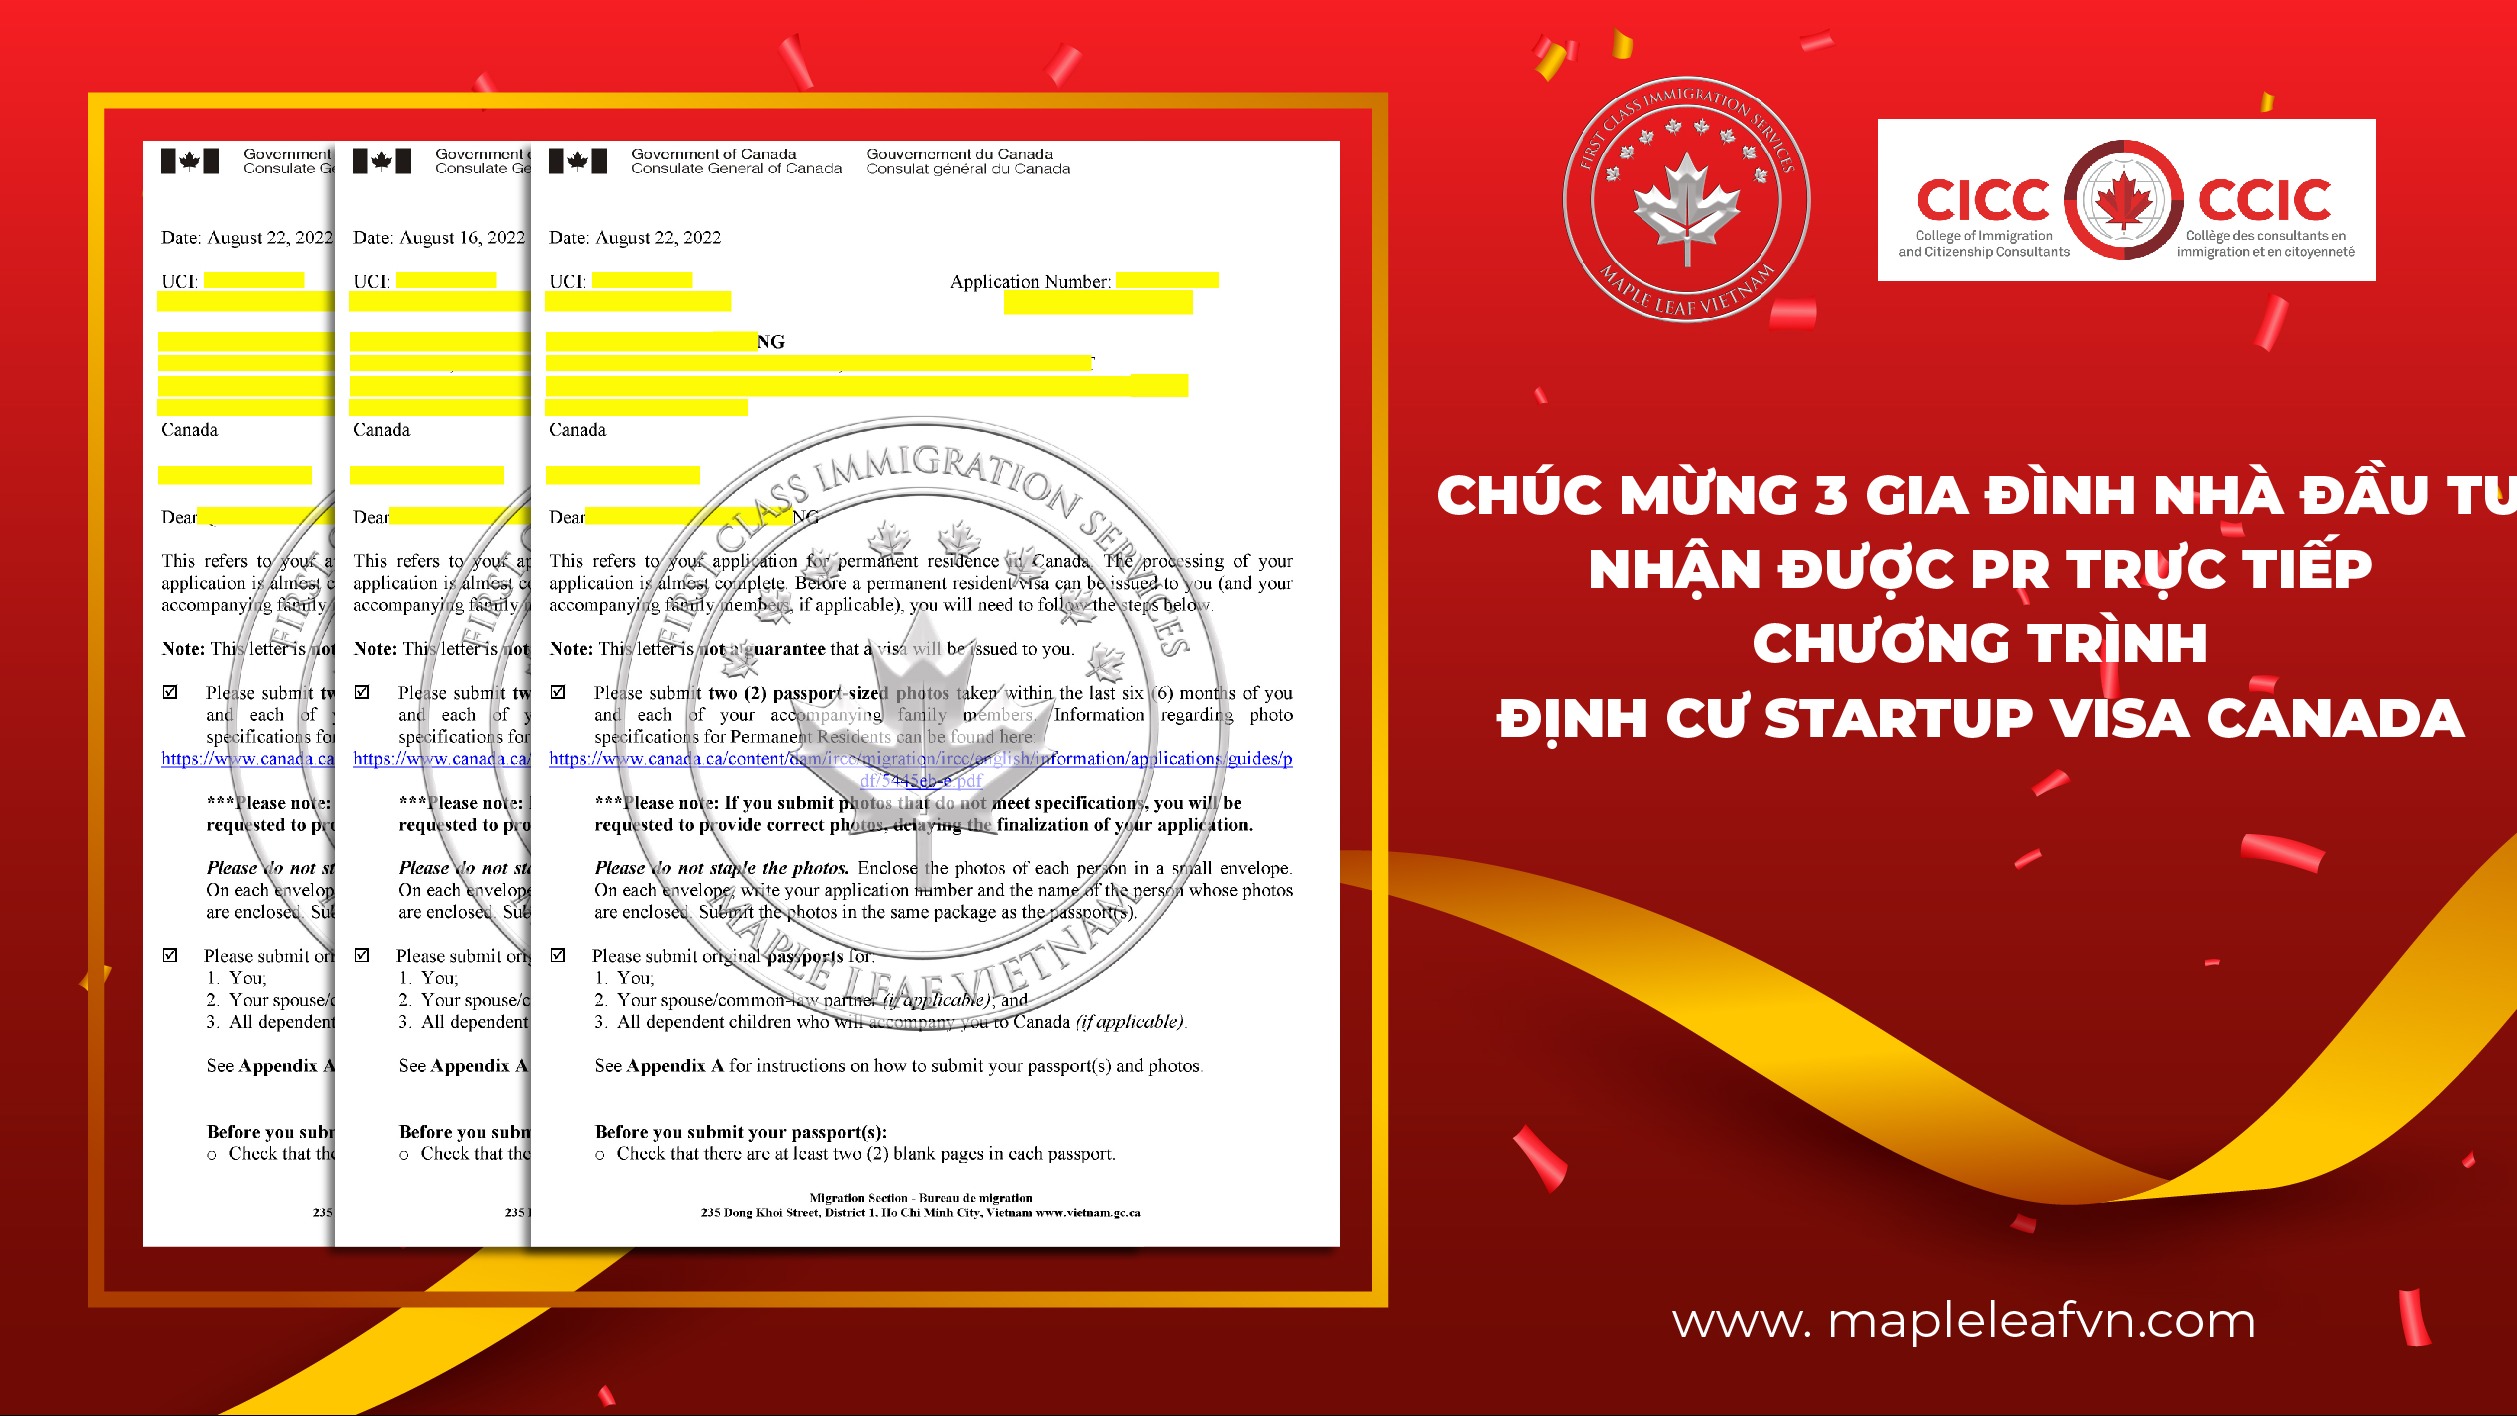 chuc-mung-3-gia-dinh-nha-dau-tu-nhan-duoc-pr-truc-tiep-chuong-trinh-dinh-cu-startup-visa-canada